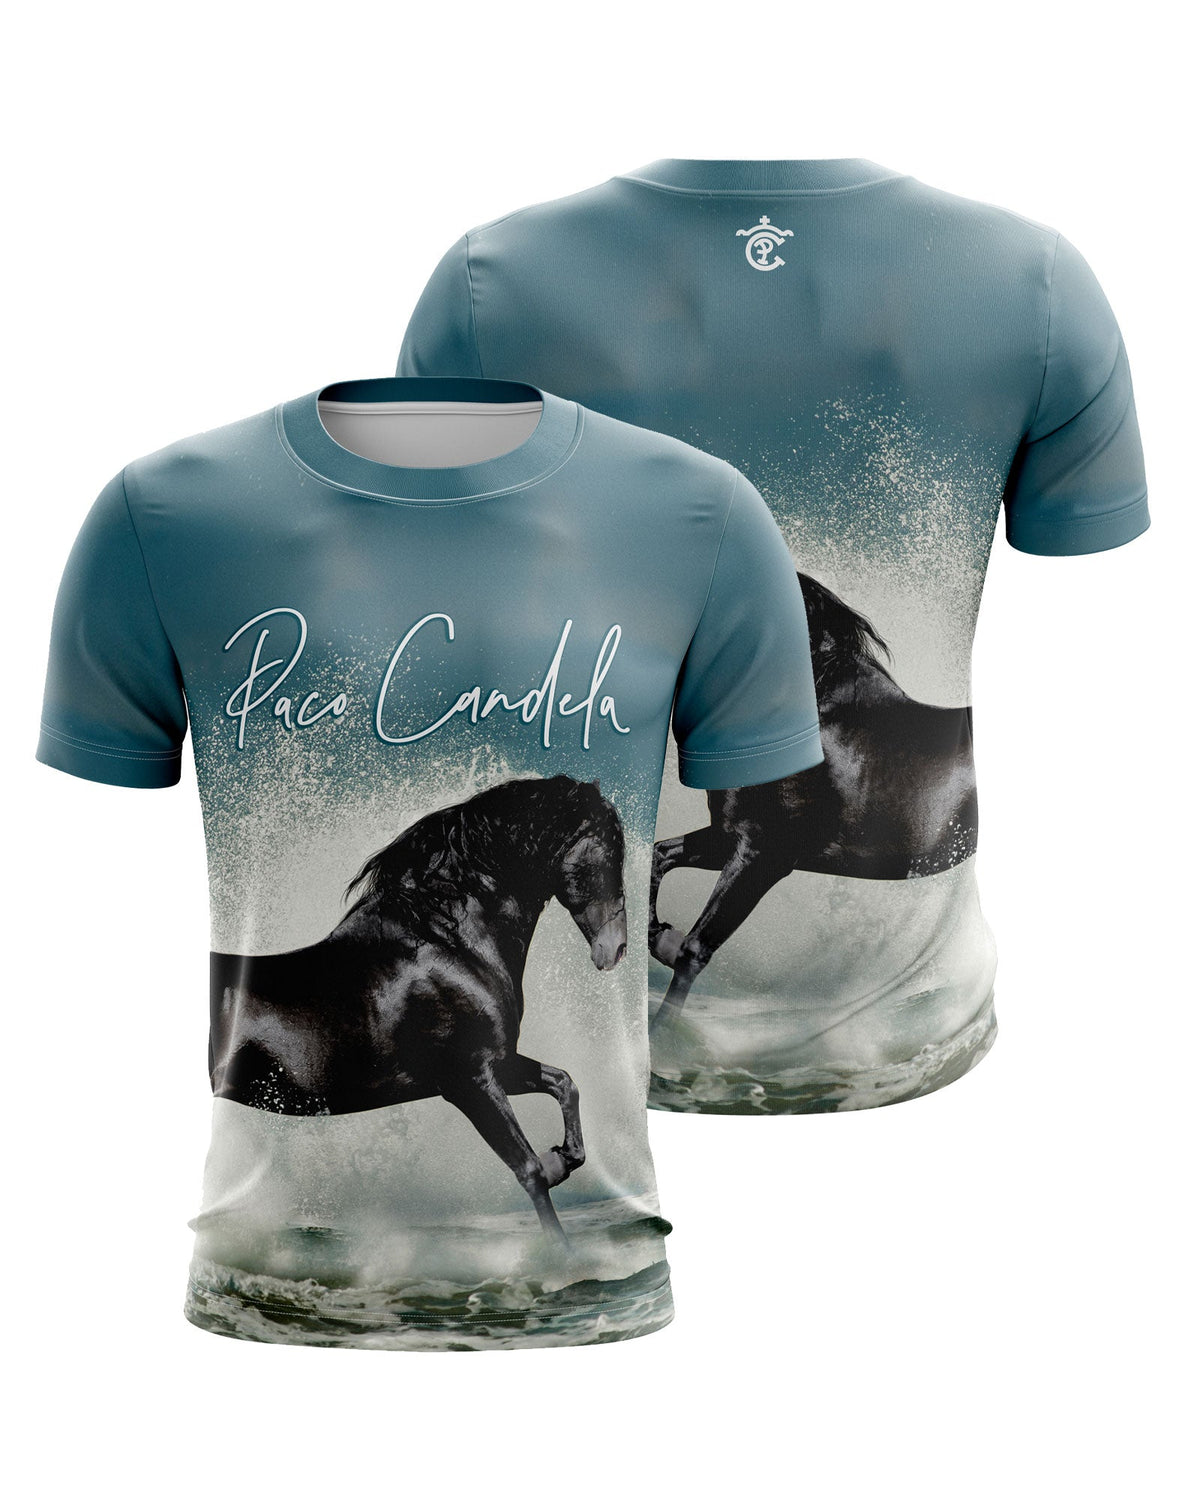 Camiseta Técnica "Caballo" Paco Candela - Rocktud - Paco Candela